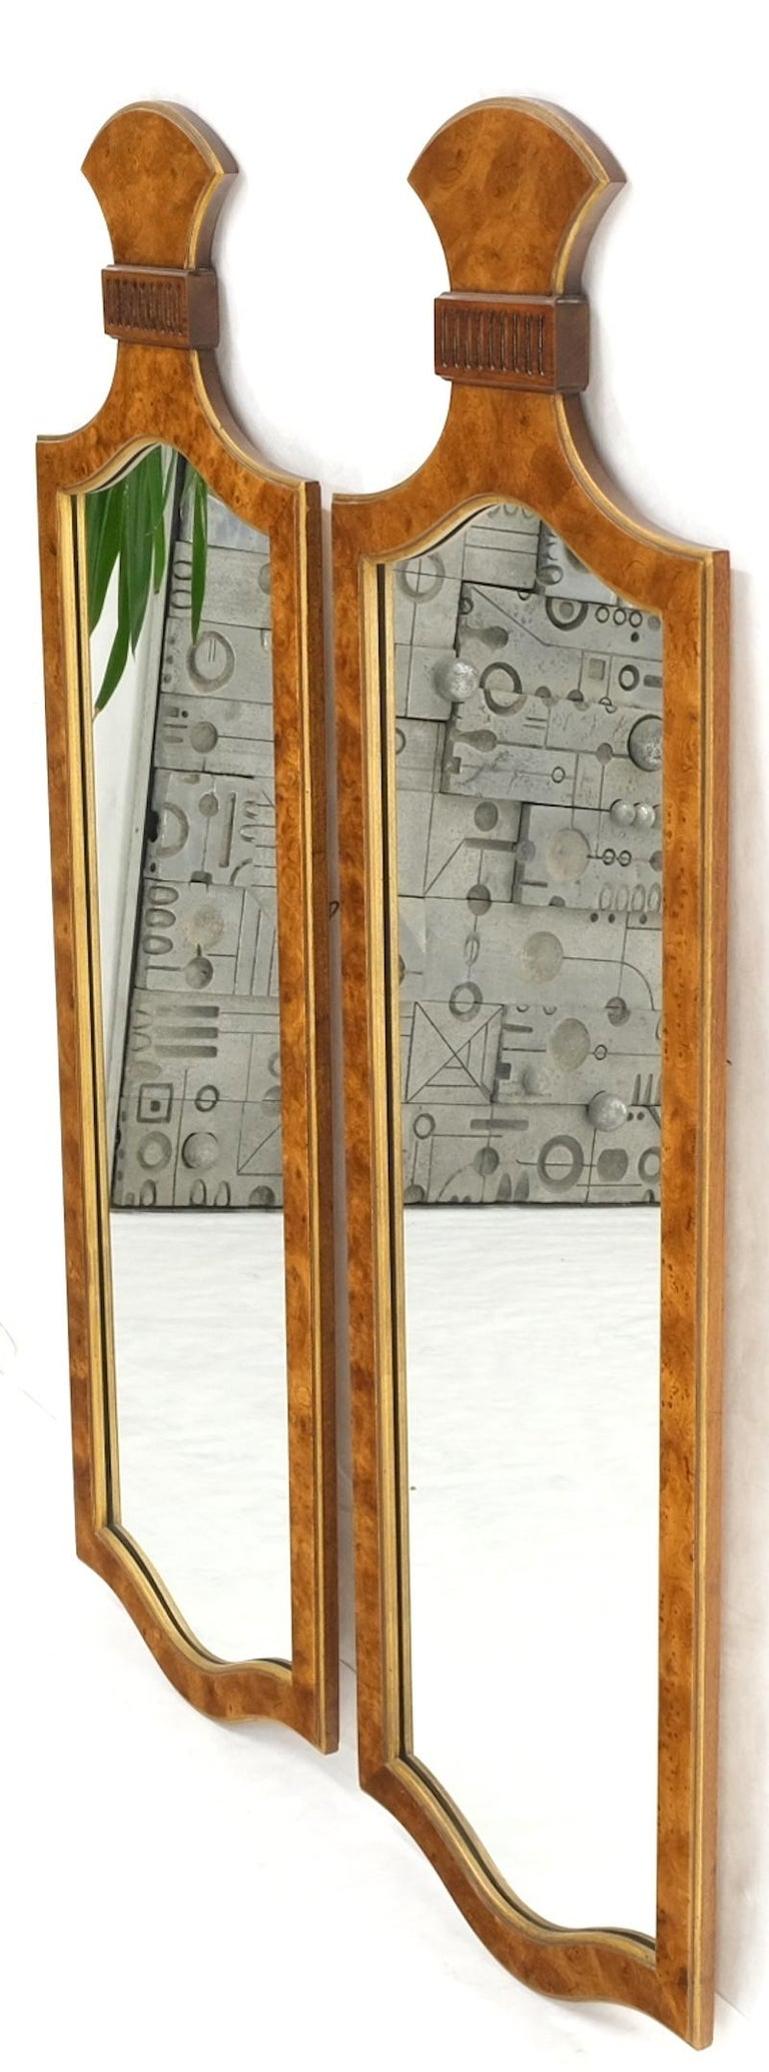 Pair of Decorative Figural Shape Burl Wall Mirrors Mid Century Modern Mint